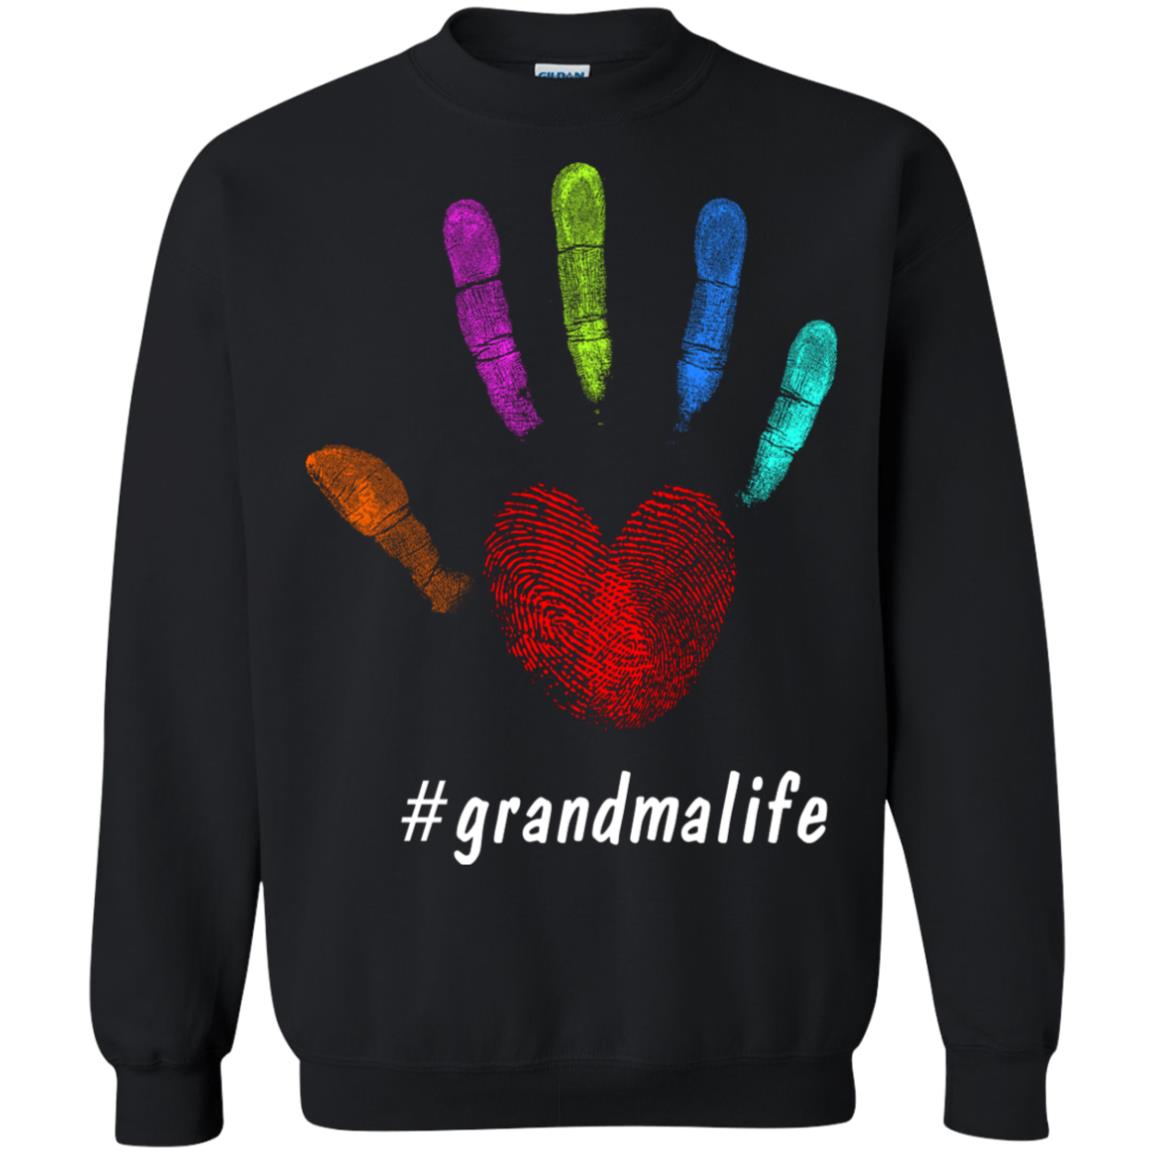 Grandma Life Fingerprint Heart Hand Grandmom Grandmother ShirtG180 Gildan Crewneck Pullover Sweatshirt 8 oz.